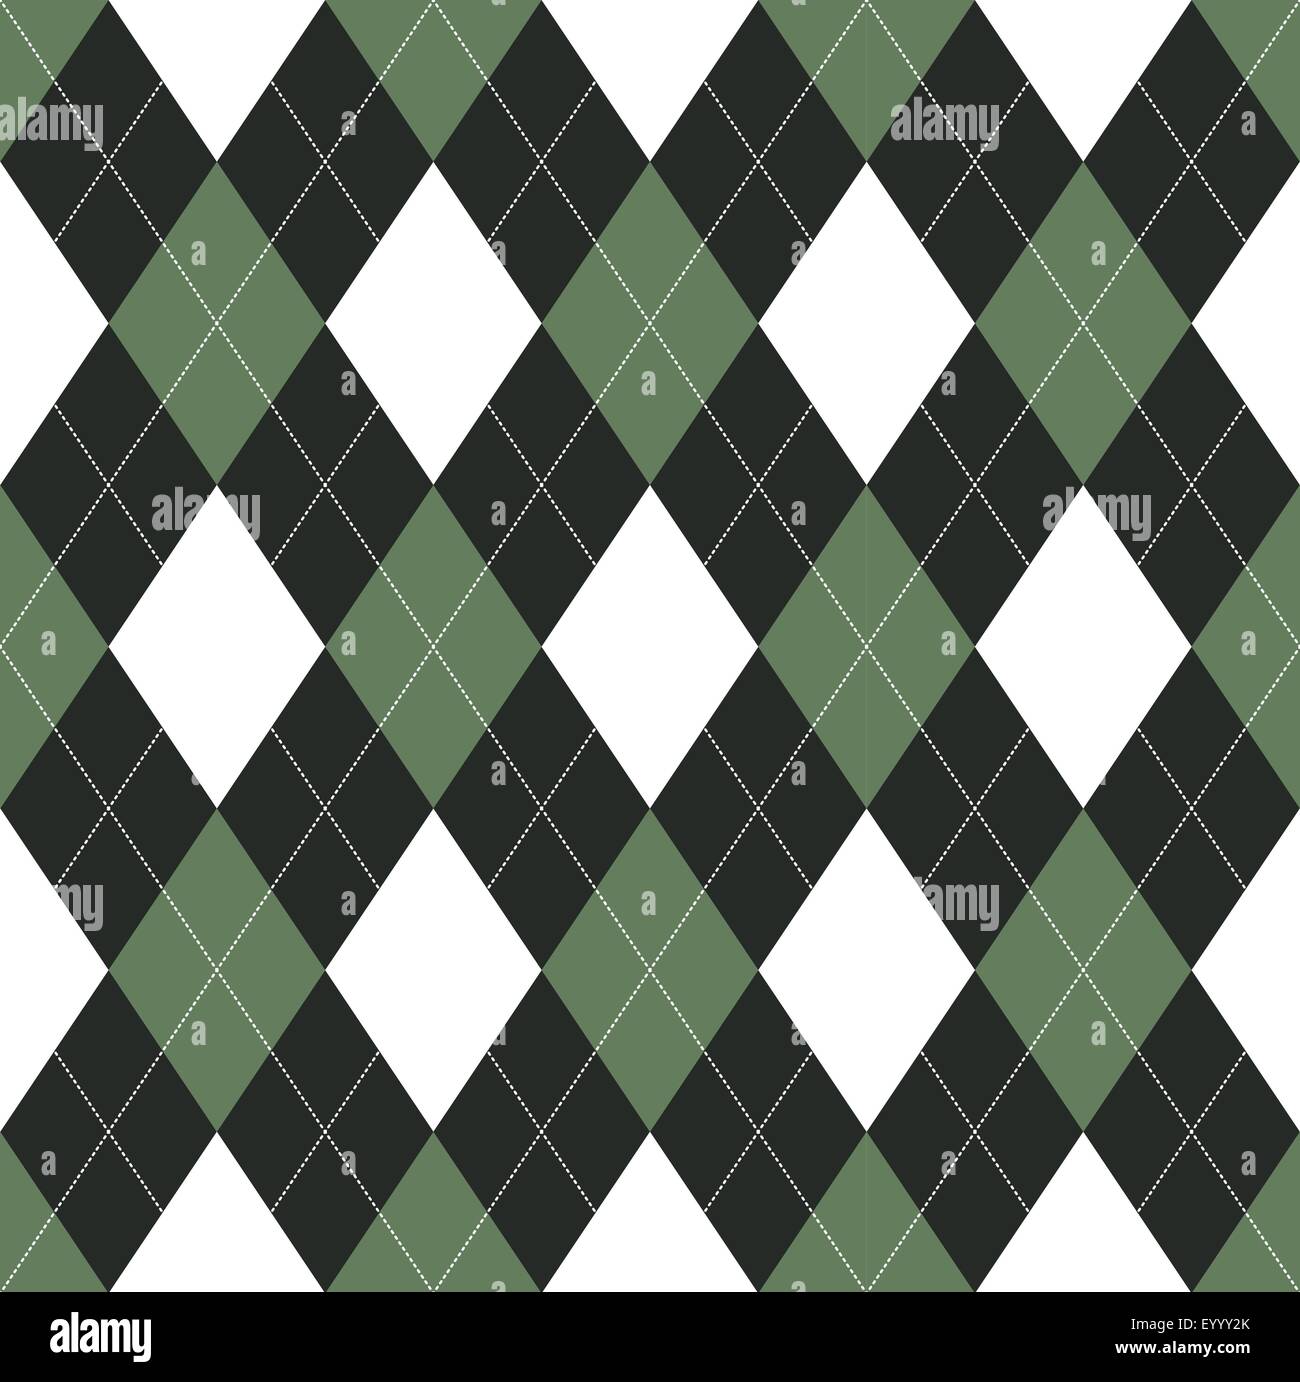 Seamless argyle pattern. Diamond shapes background. Stock Vector